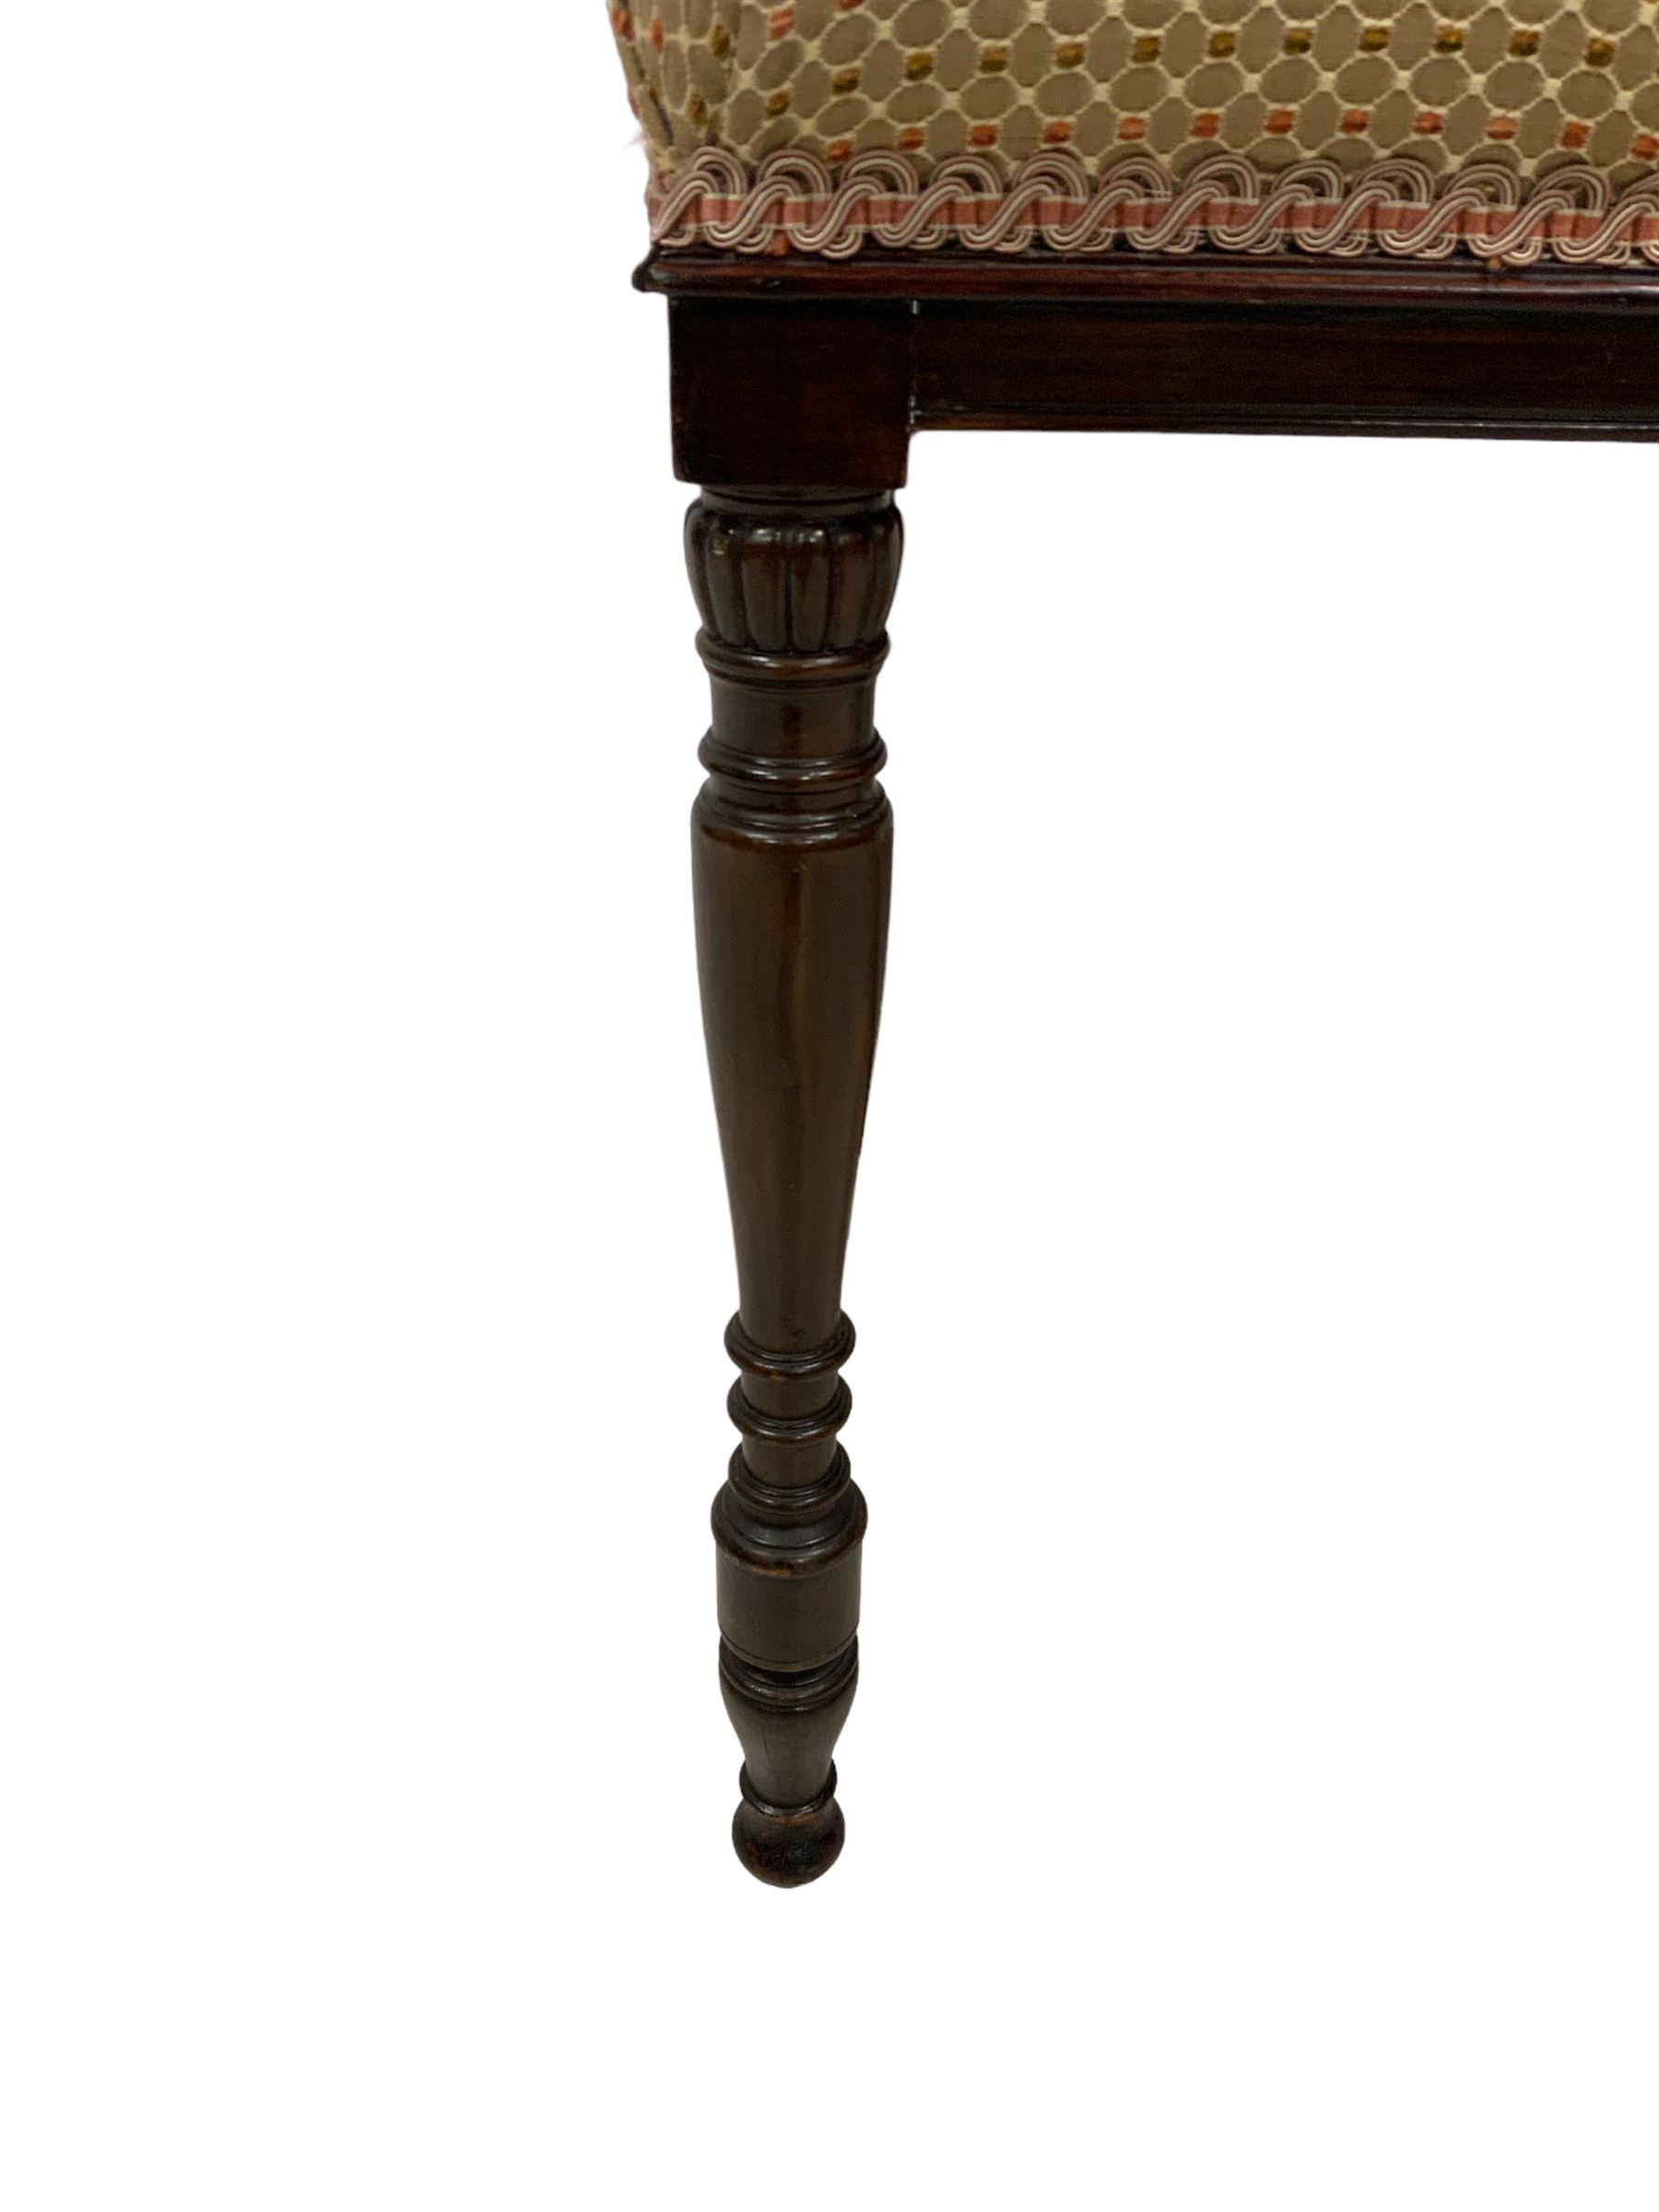 Regency design walnut piano duet stool - Image 8 of 8